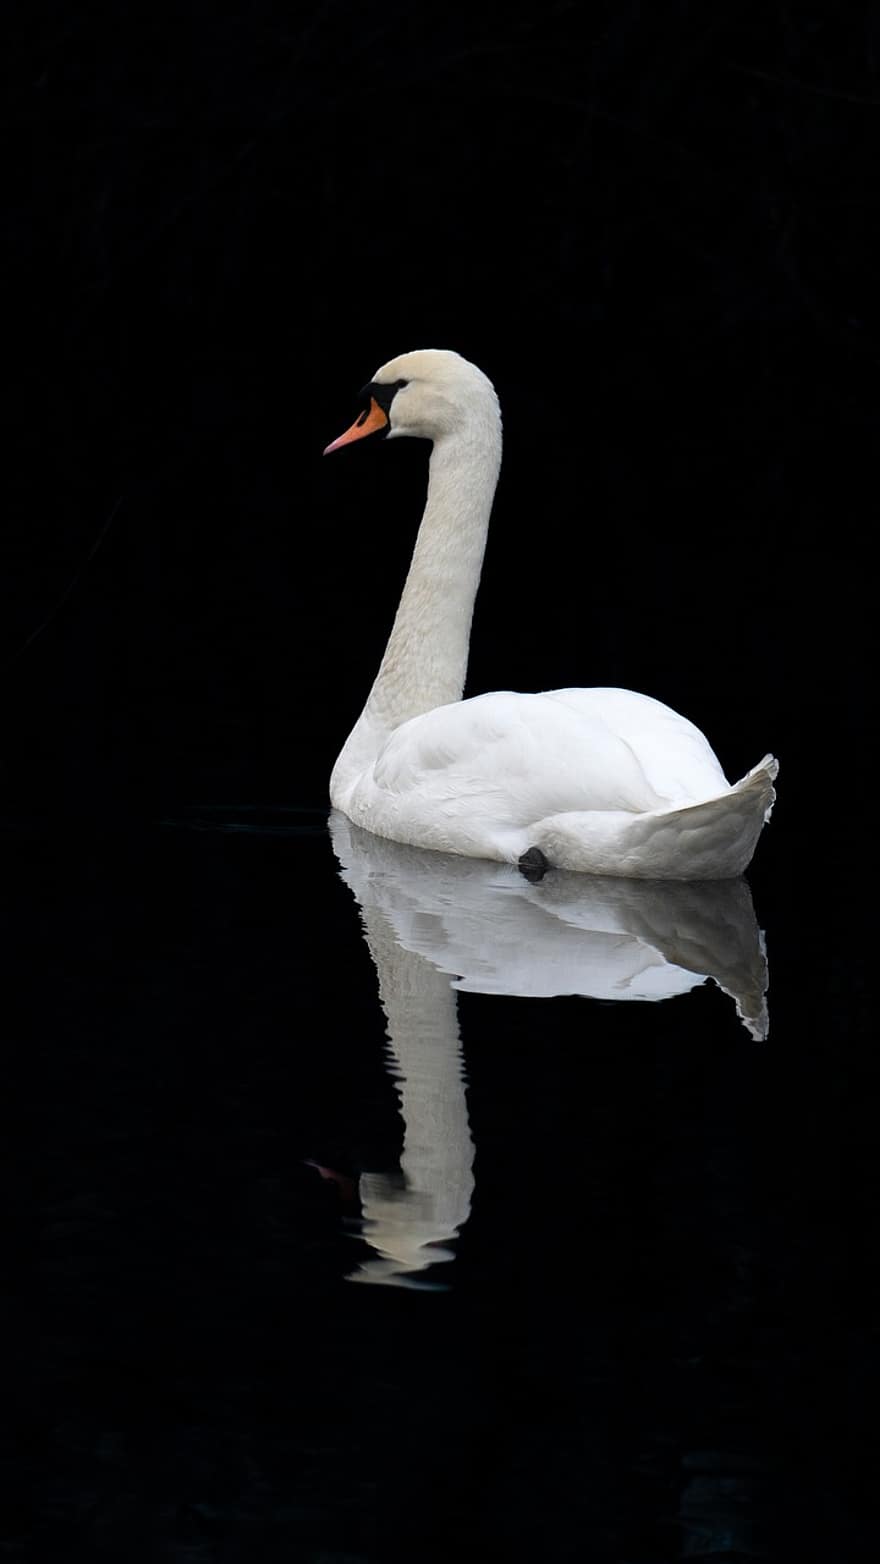 Swan, Lake, Bird, Reflection, Black, White, Contrast, feather, beak, animals in the wild, water